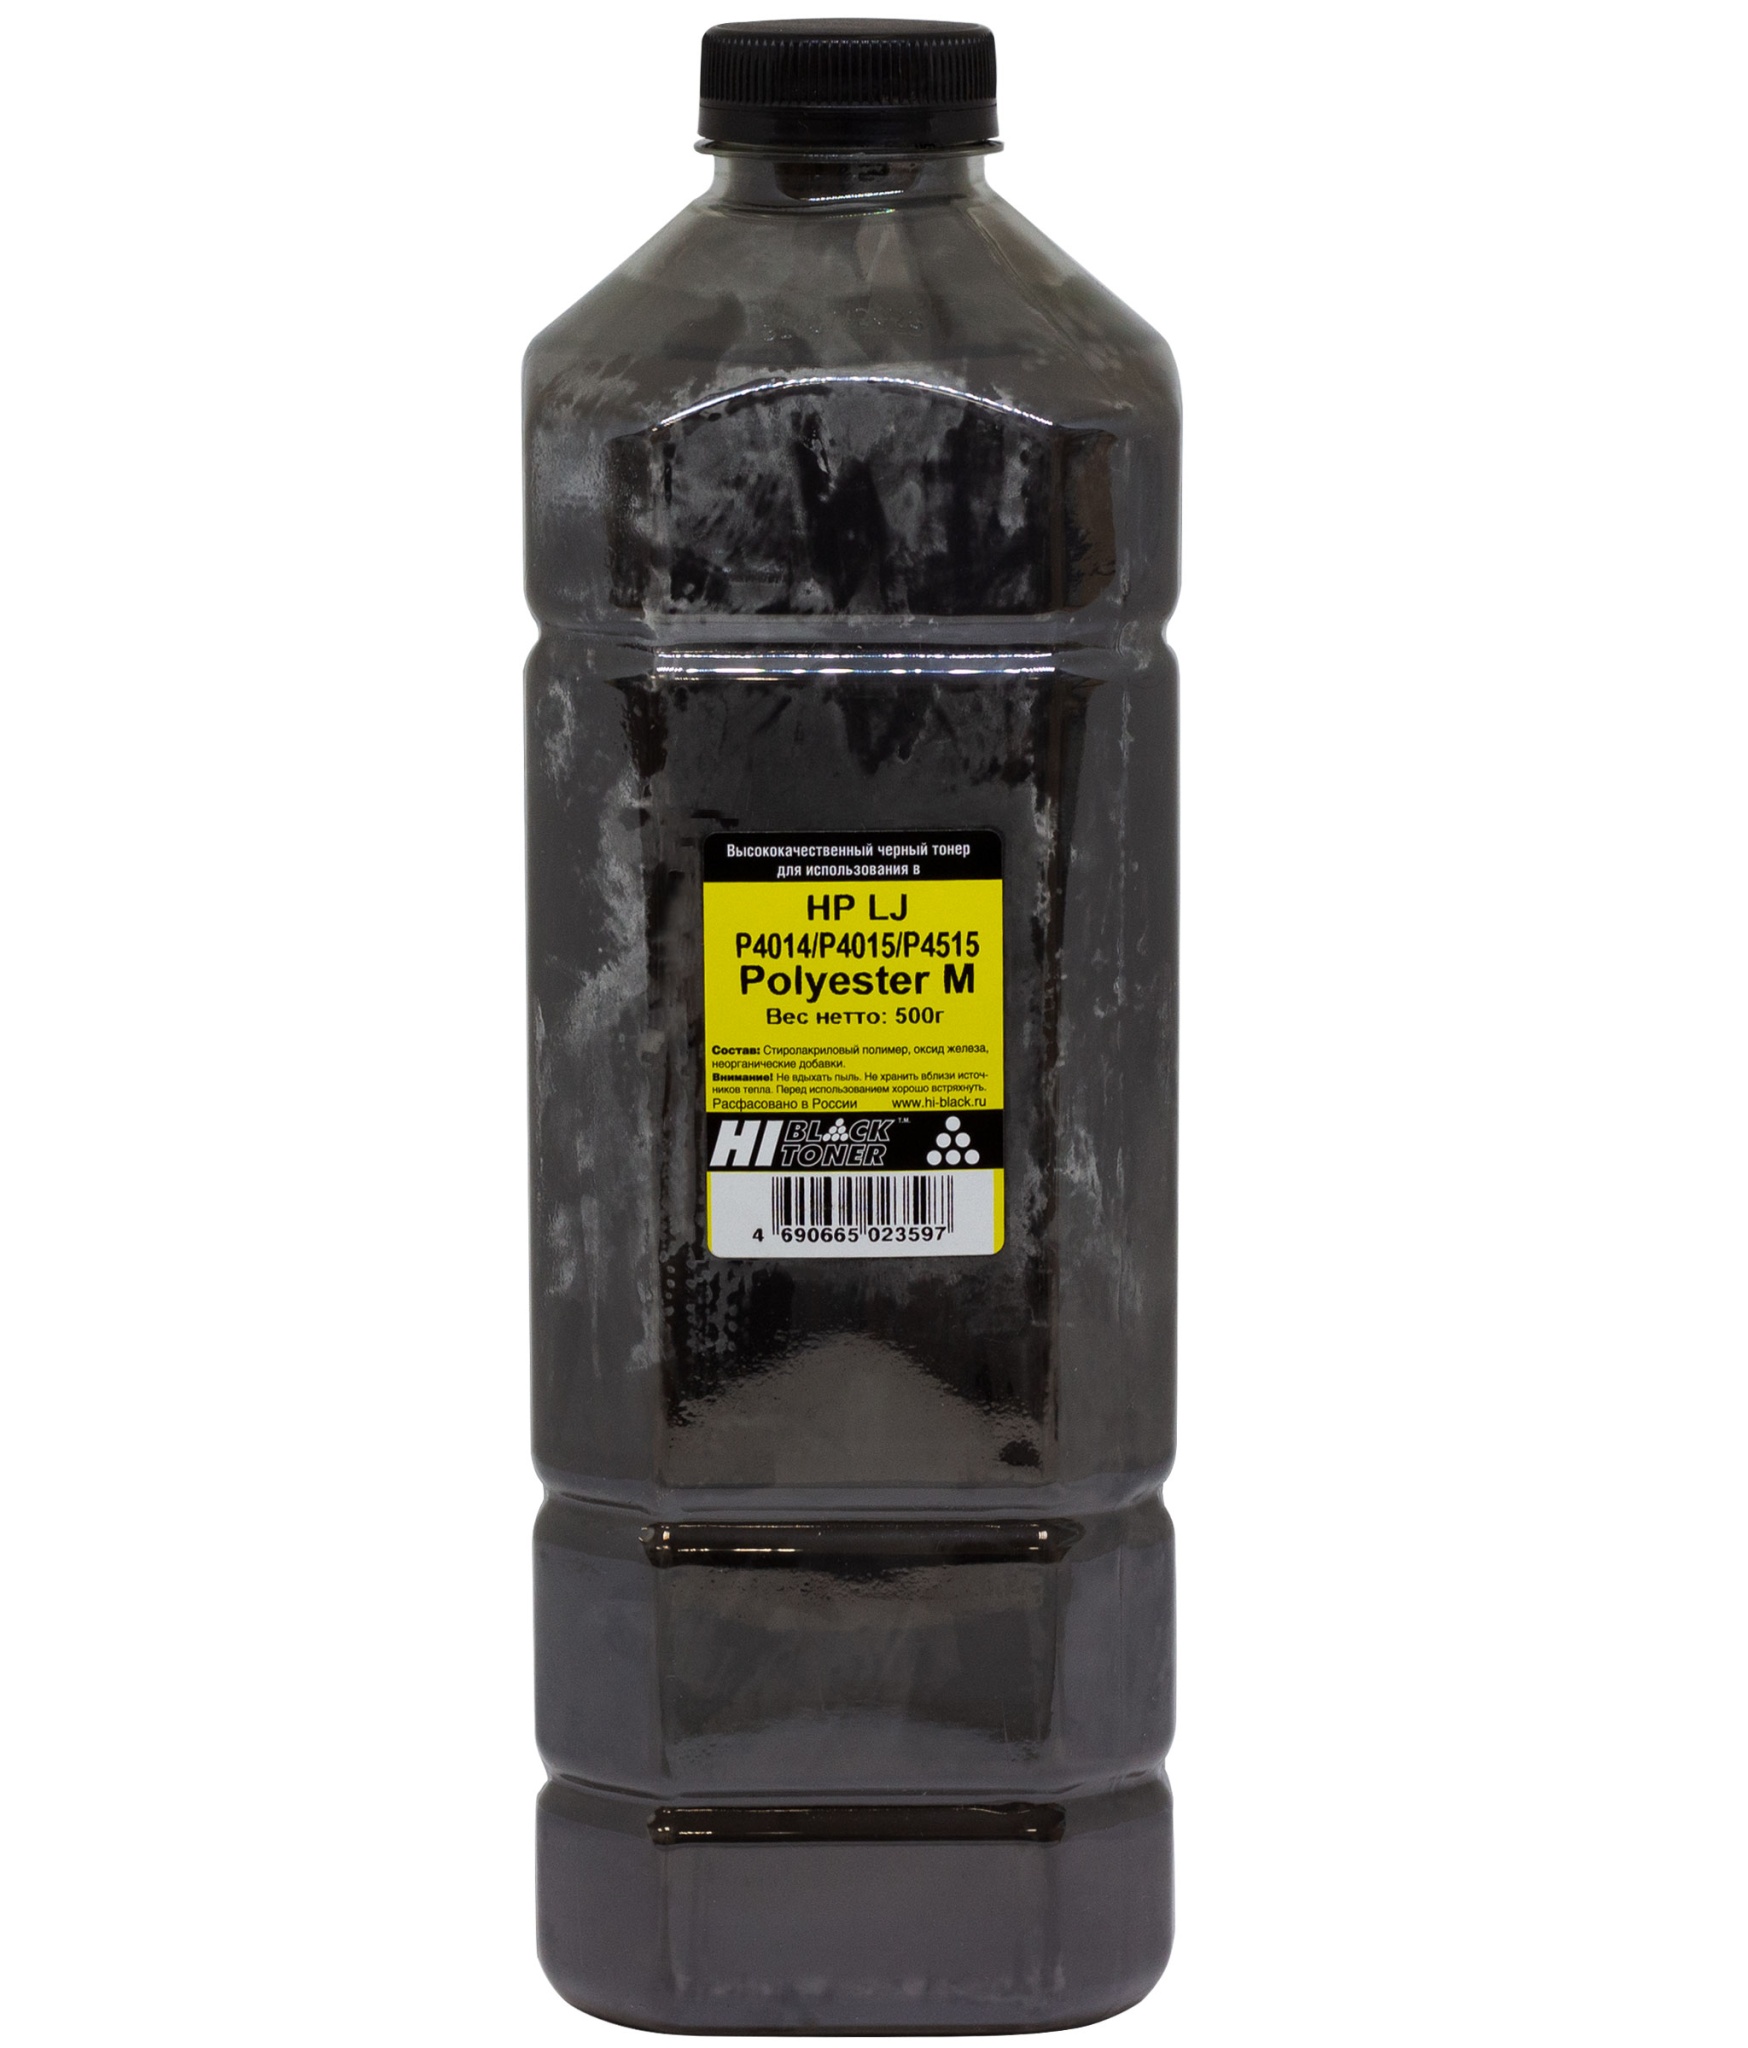 Тонер Hi-Black (CC364A) для HP LJ P4014/ P4015/ P4515, Polyester M, чёрный (500 гр.)